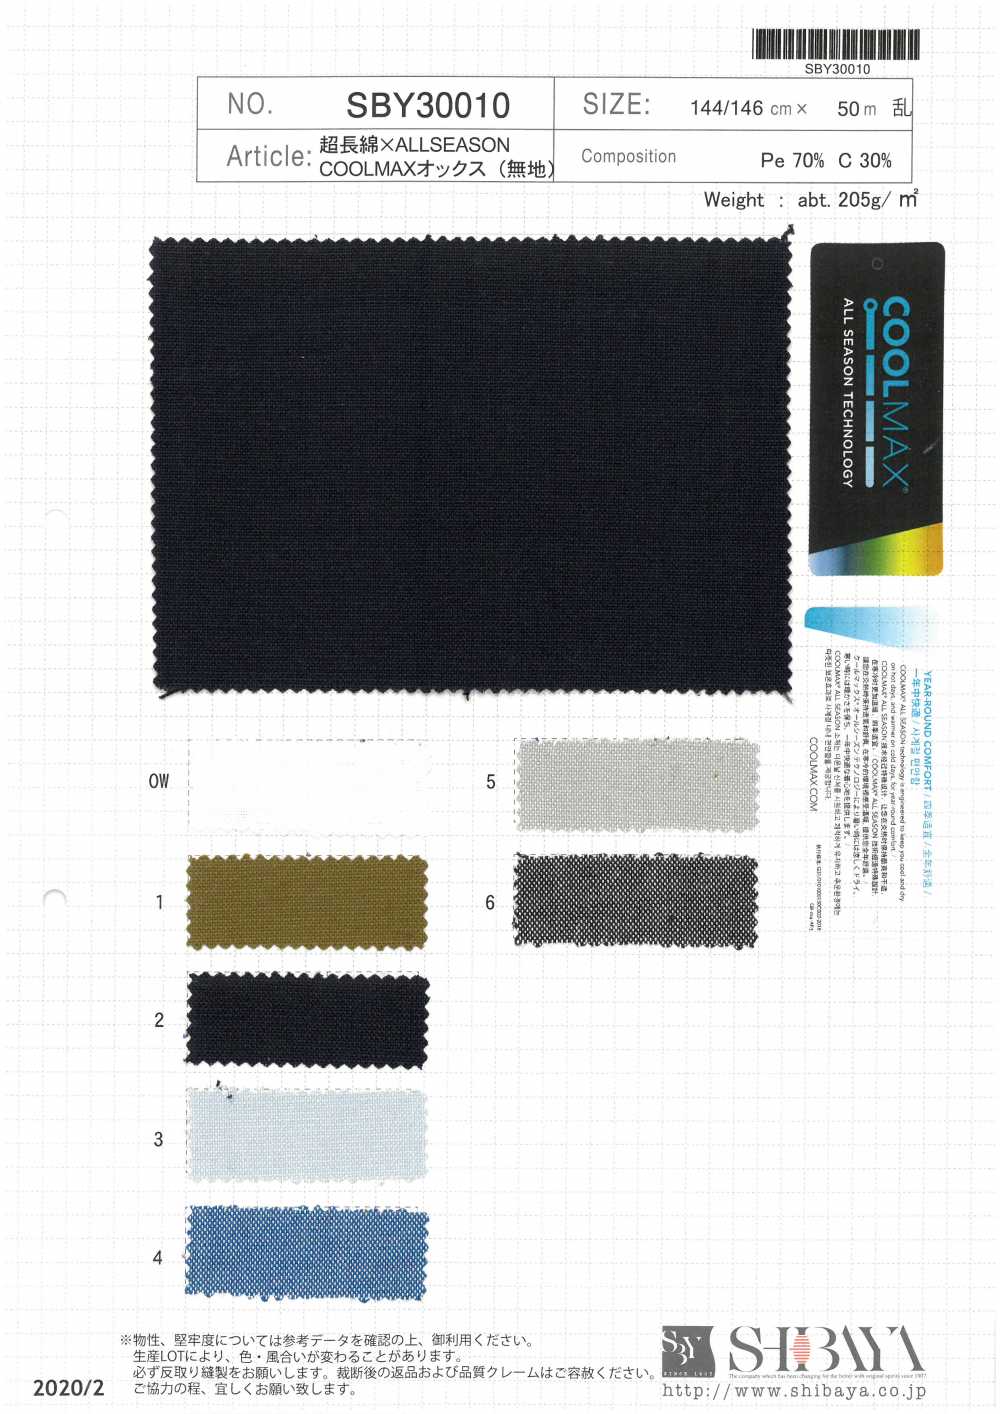 SBY30010 Super Long Cotton × ALLSEASON COOLMAX Oxford(Plain)[Textile / Fabric] SHIBAYA